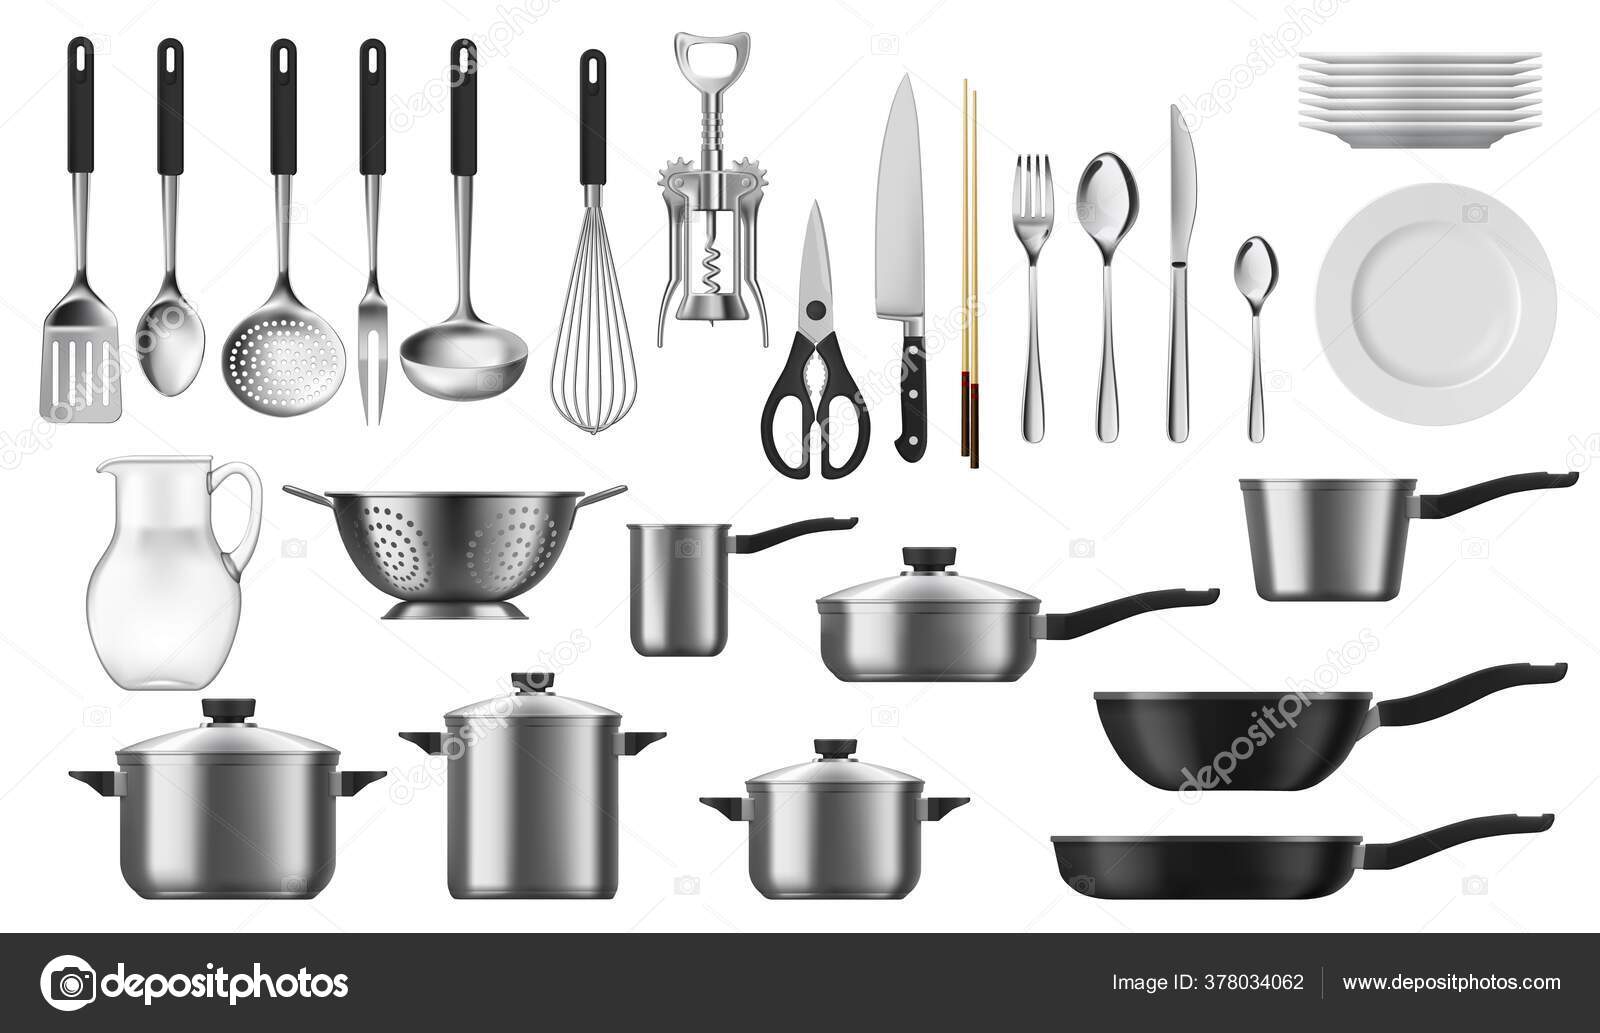 https://st4.depositphotos.com/1020070/37803/v/1600/depositphotos_378034062-stock-illustration-kitchenware-realistic-set-vector-kitchen.jpg